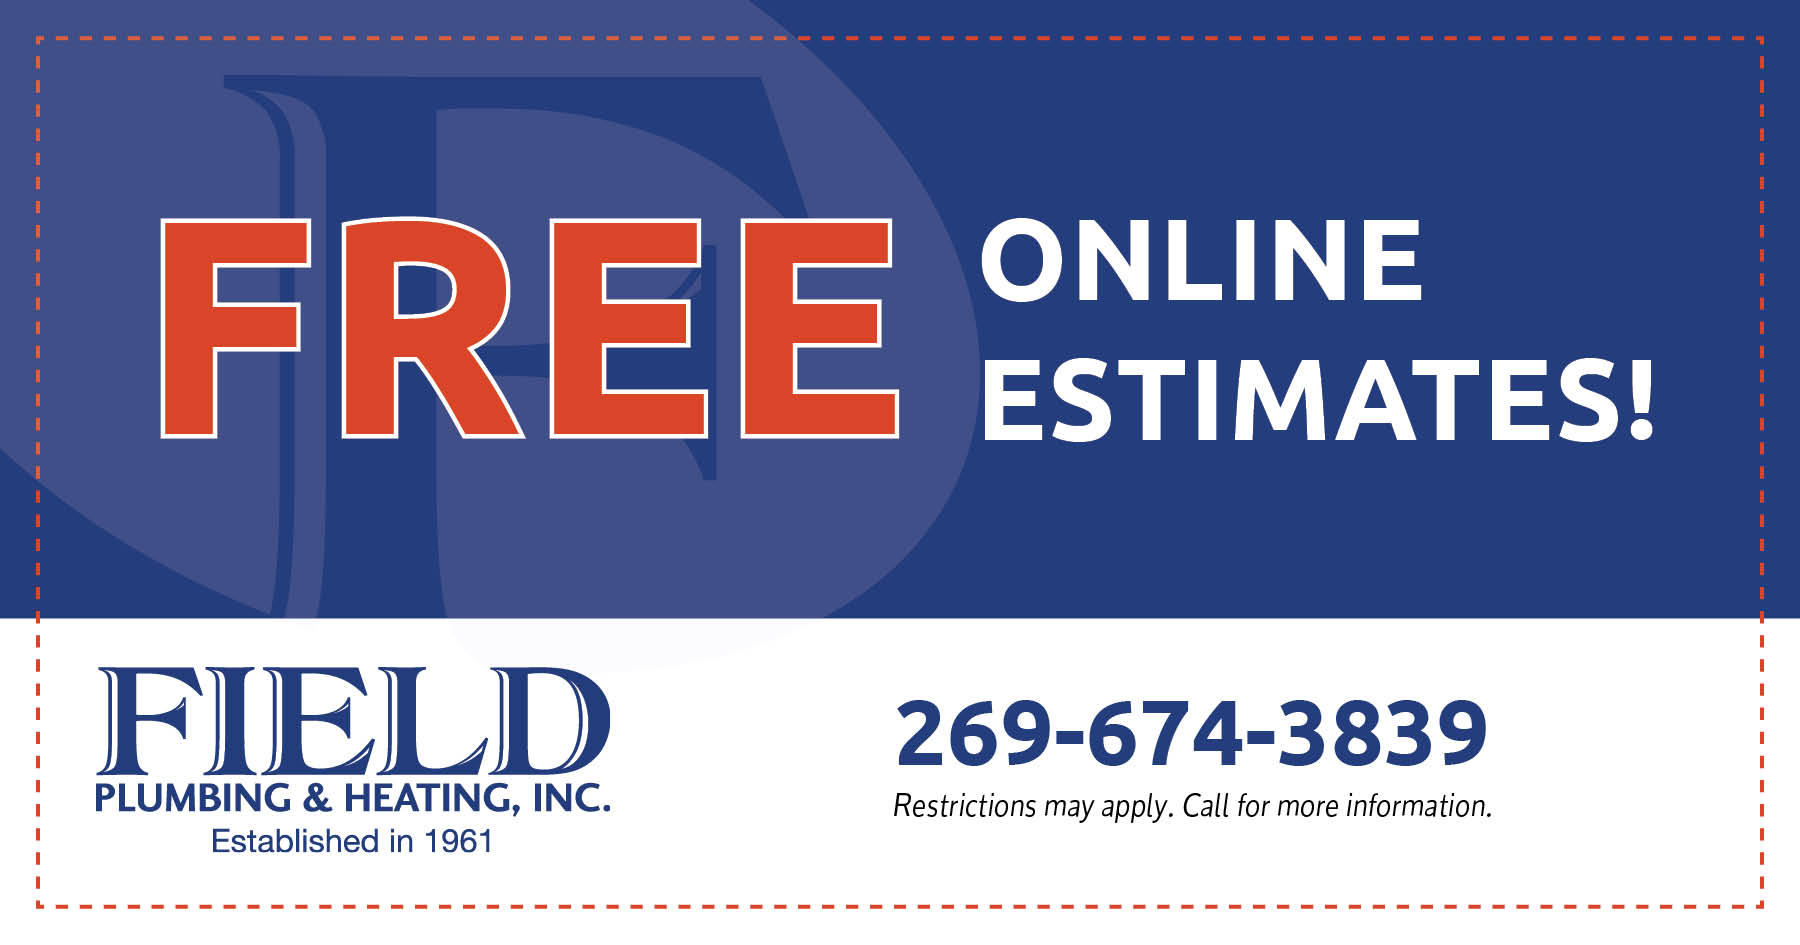 FREE online estimates!